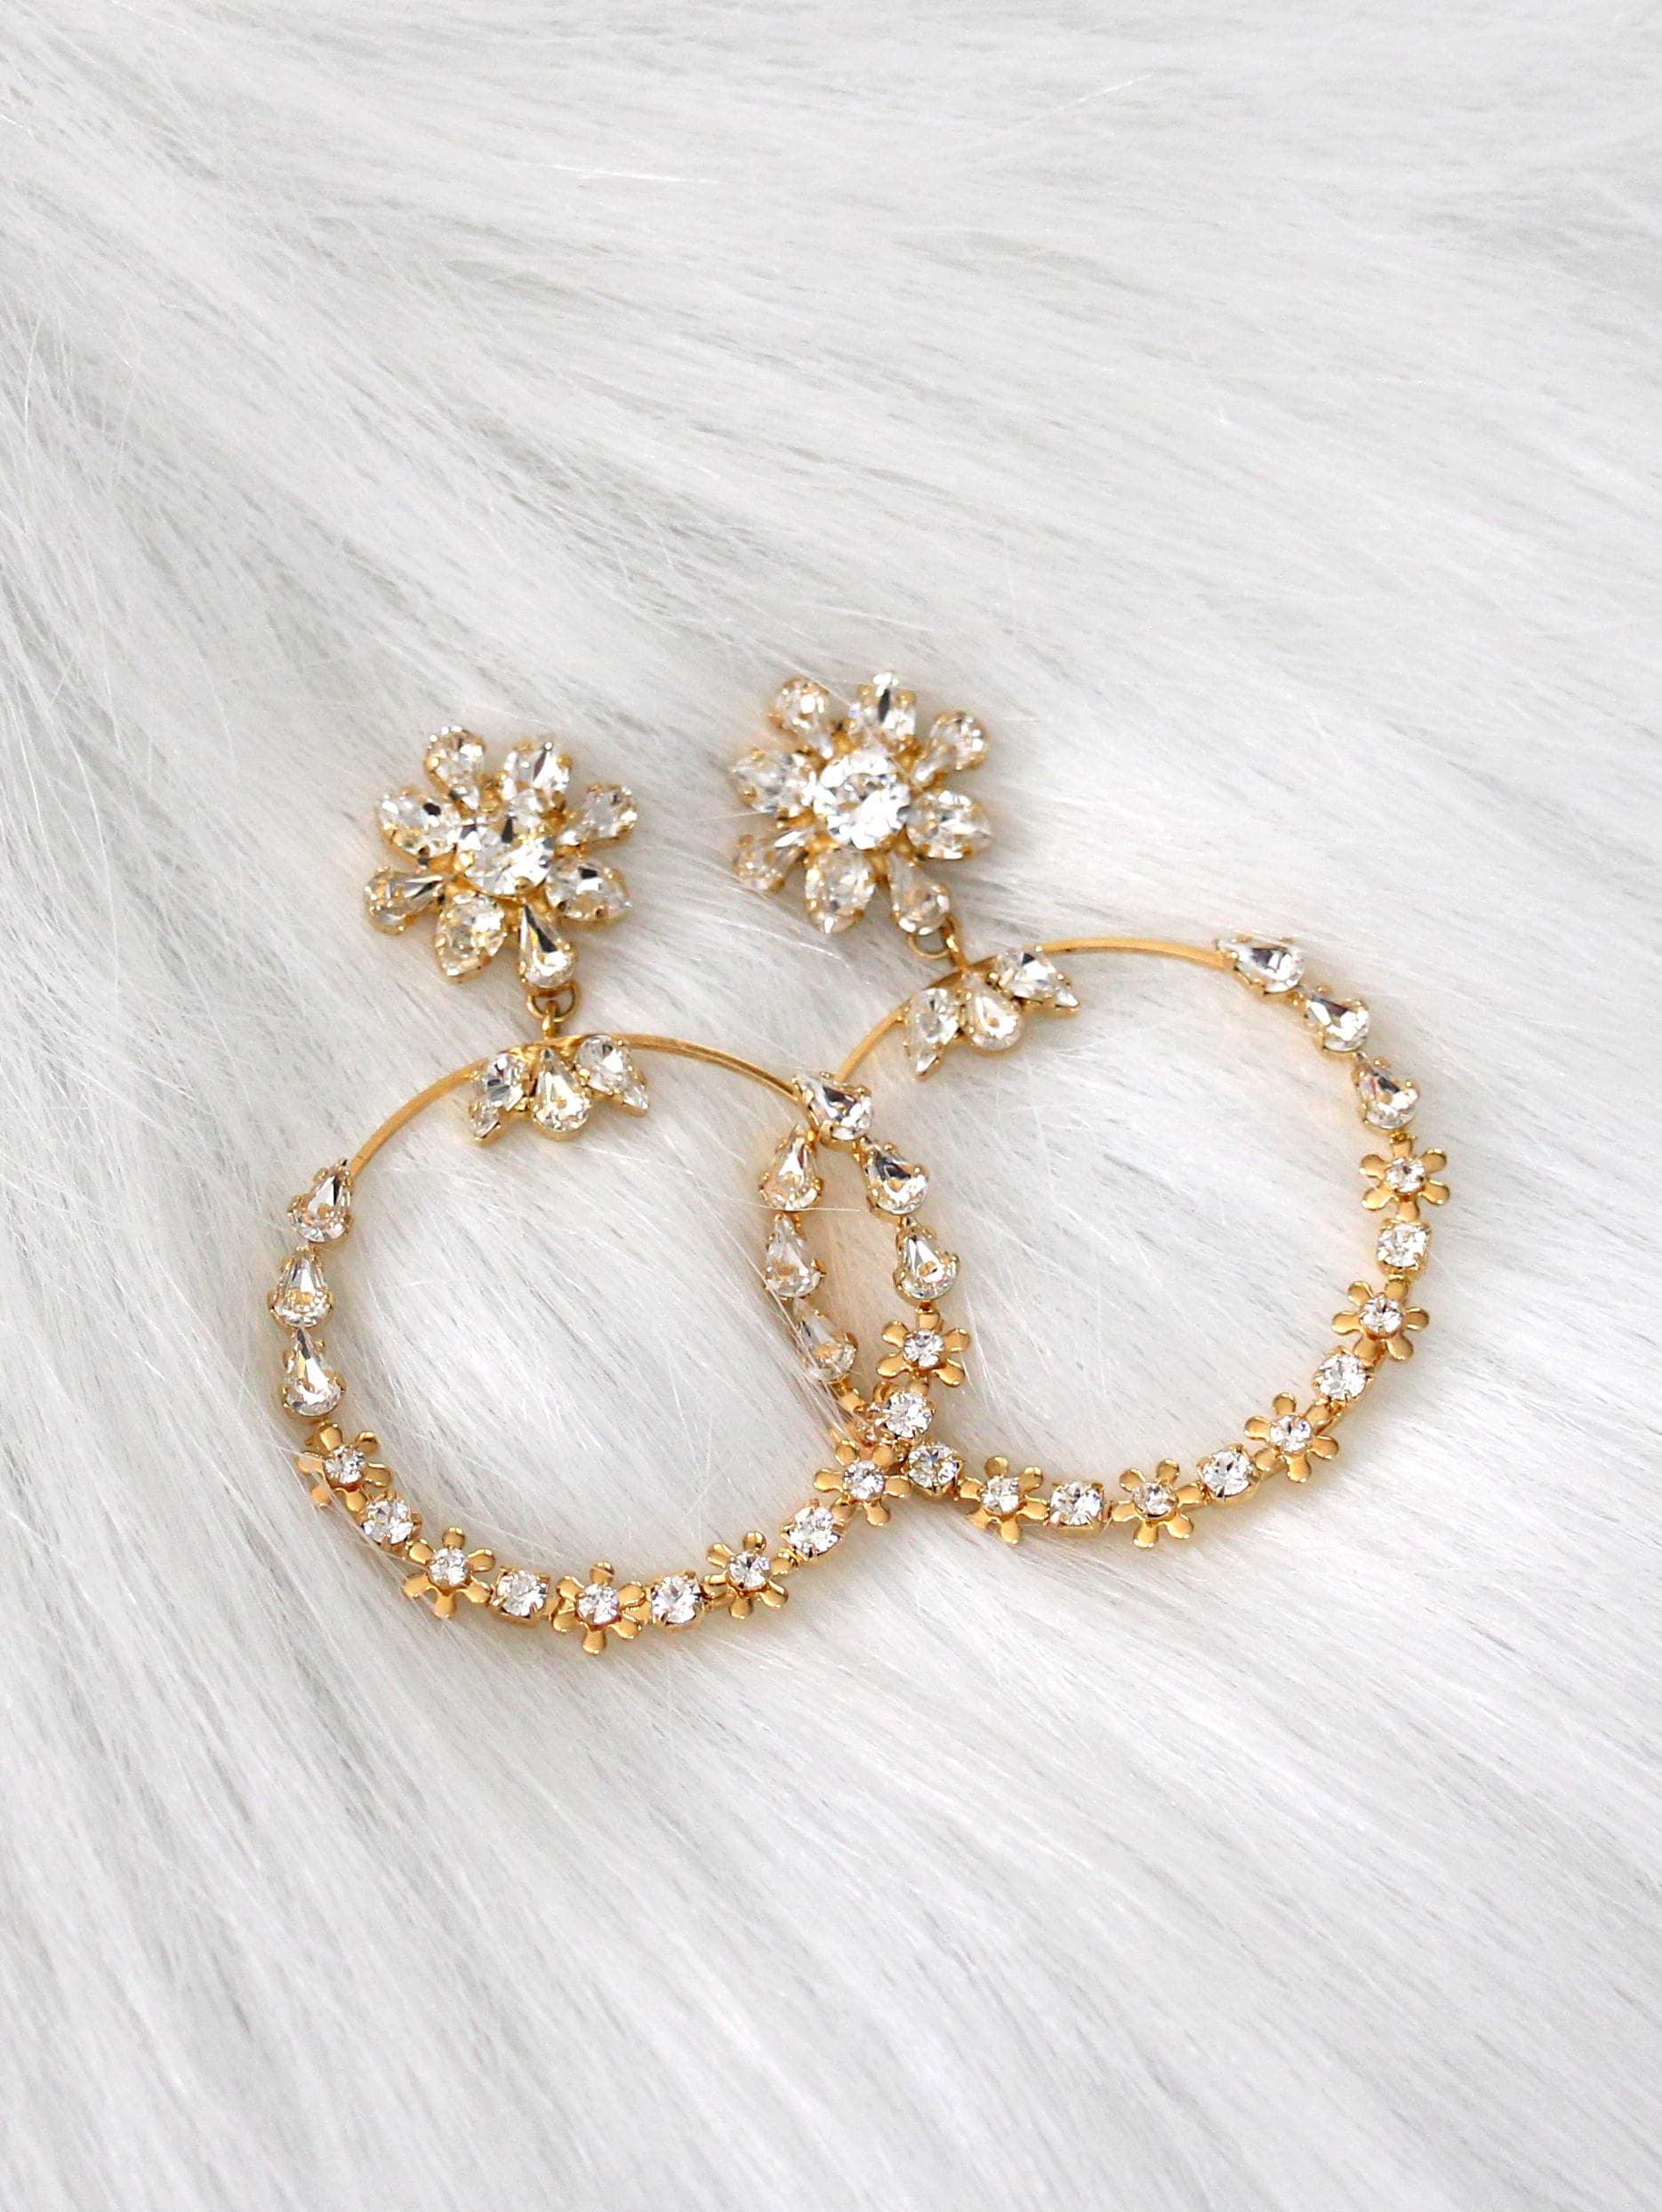 Buy Crystal Bridal Earrings, Round Hoop Earrings, Bridal Jewelry, Antique  Gold Wedding Earrings, Boho Style Earrings, Wedding Jewelry Online in India  - Etsy